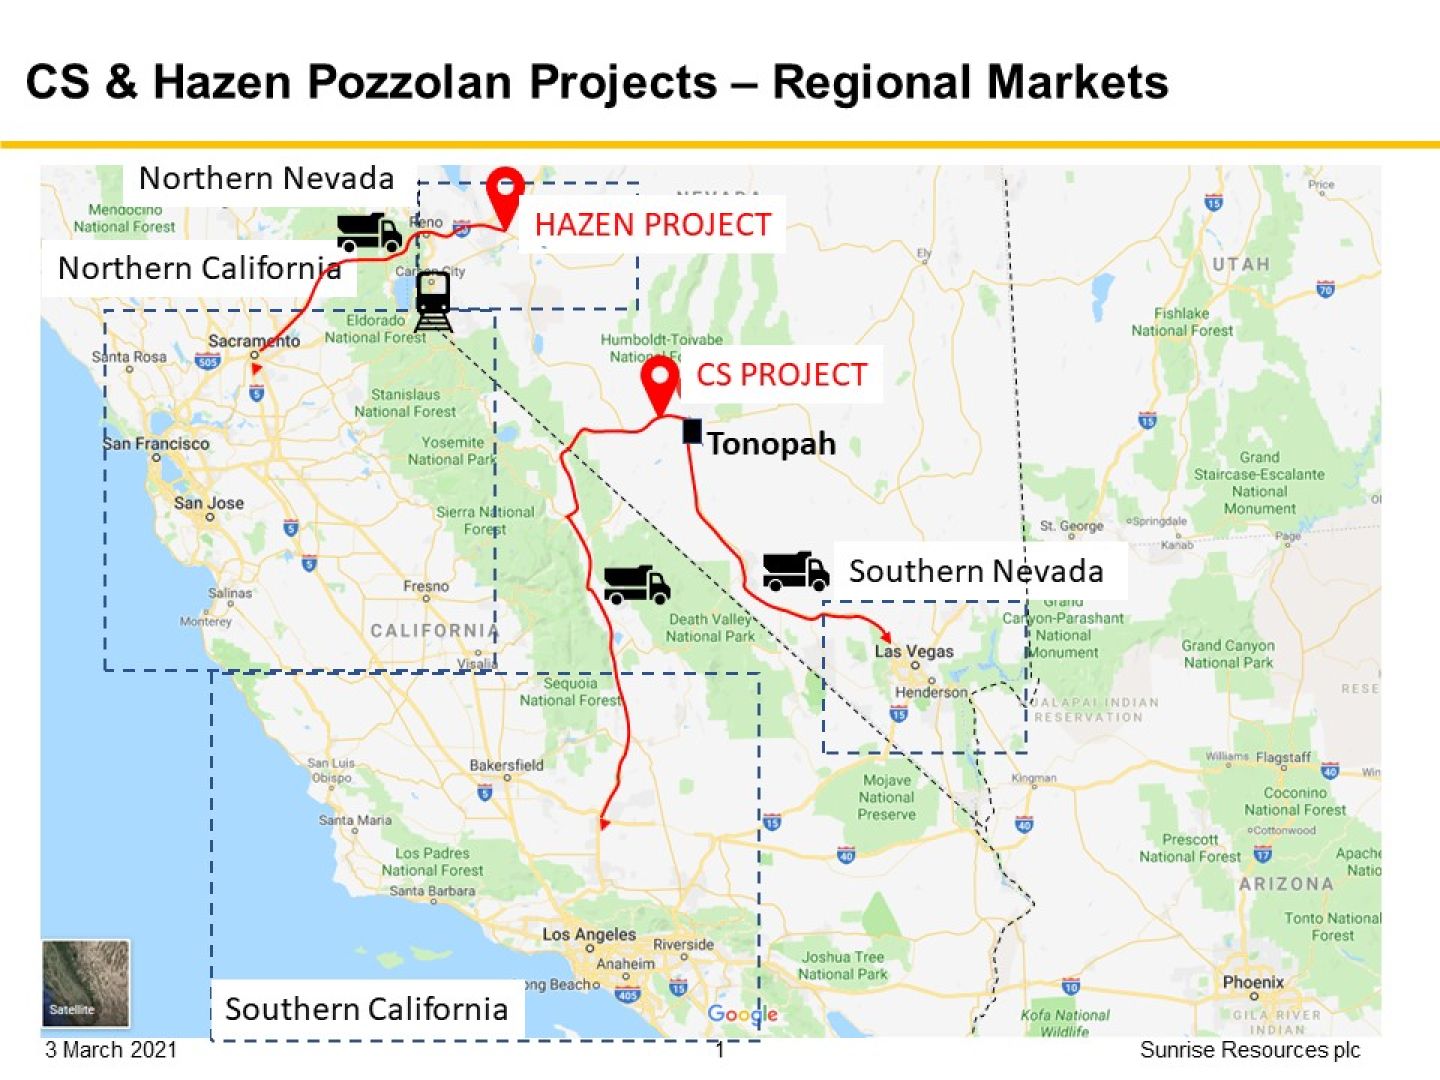 CS & Hazen Pozzolan Projects - Regional Markets